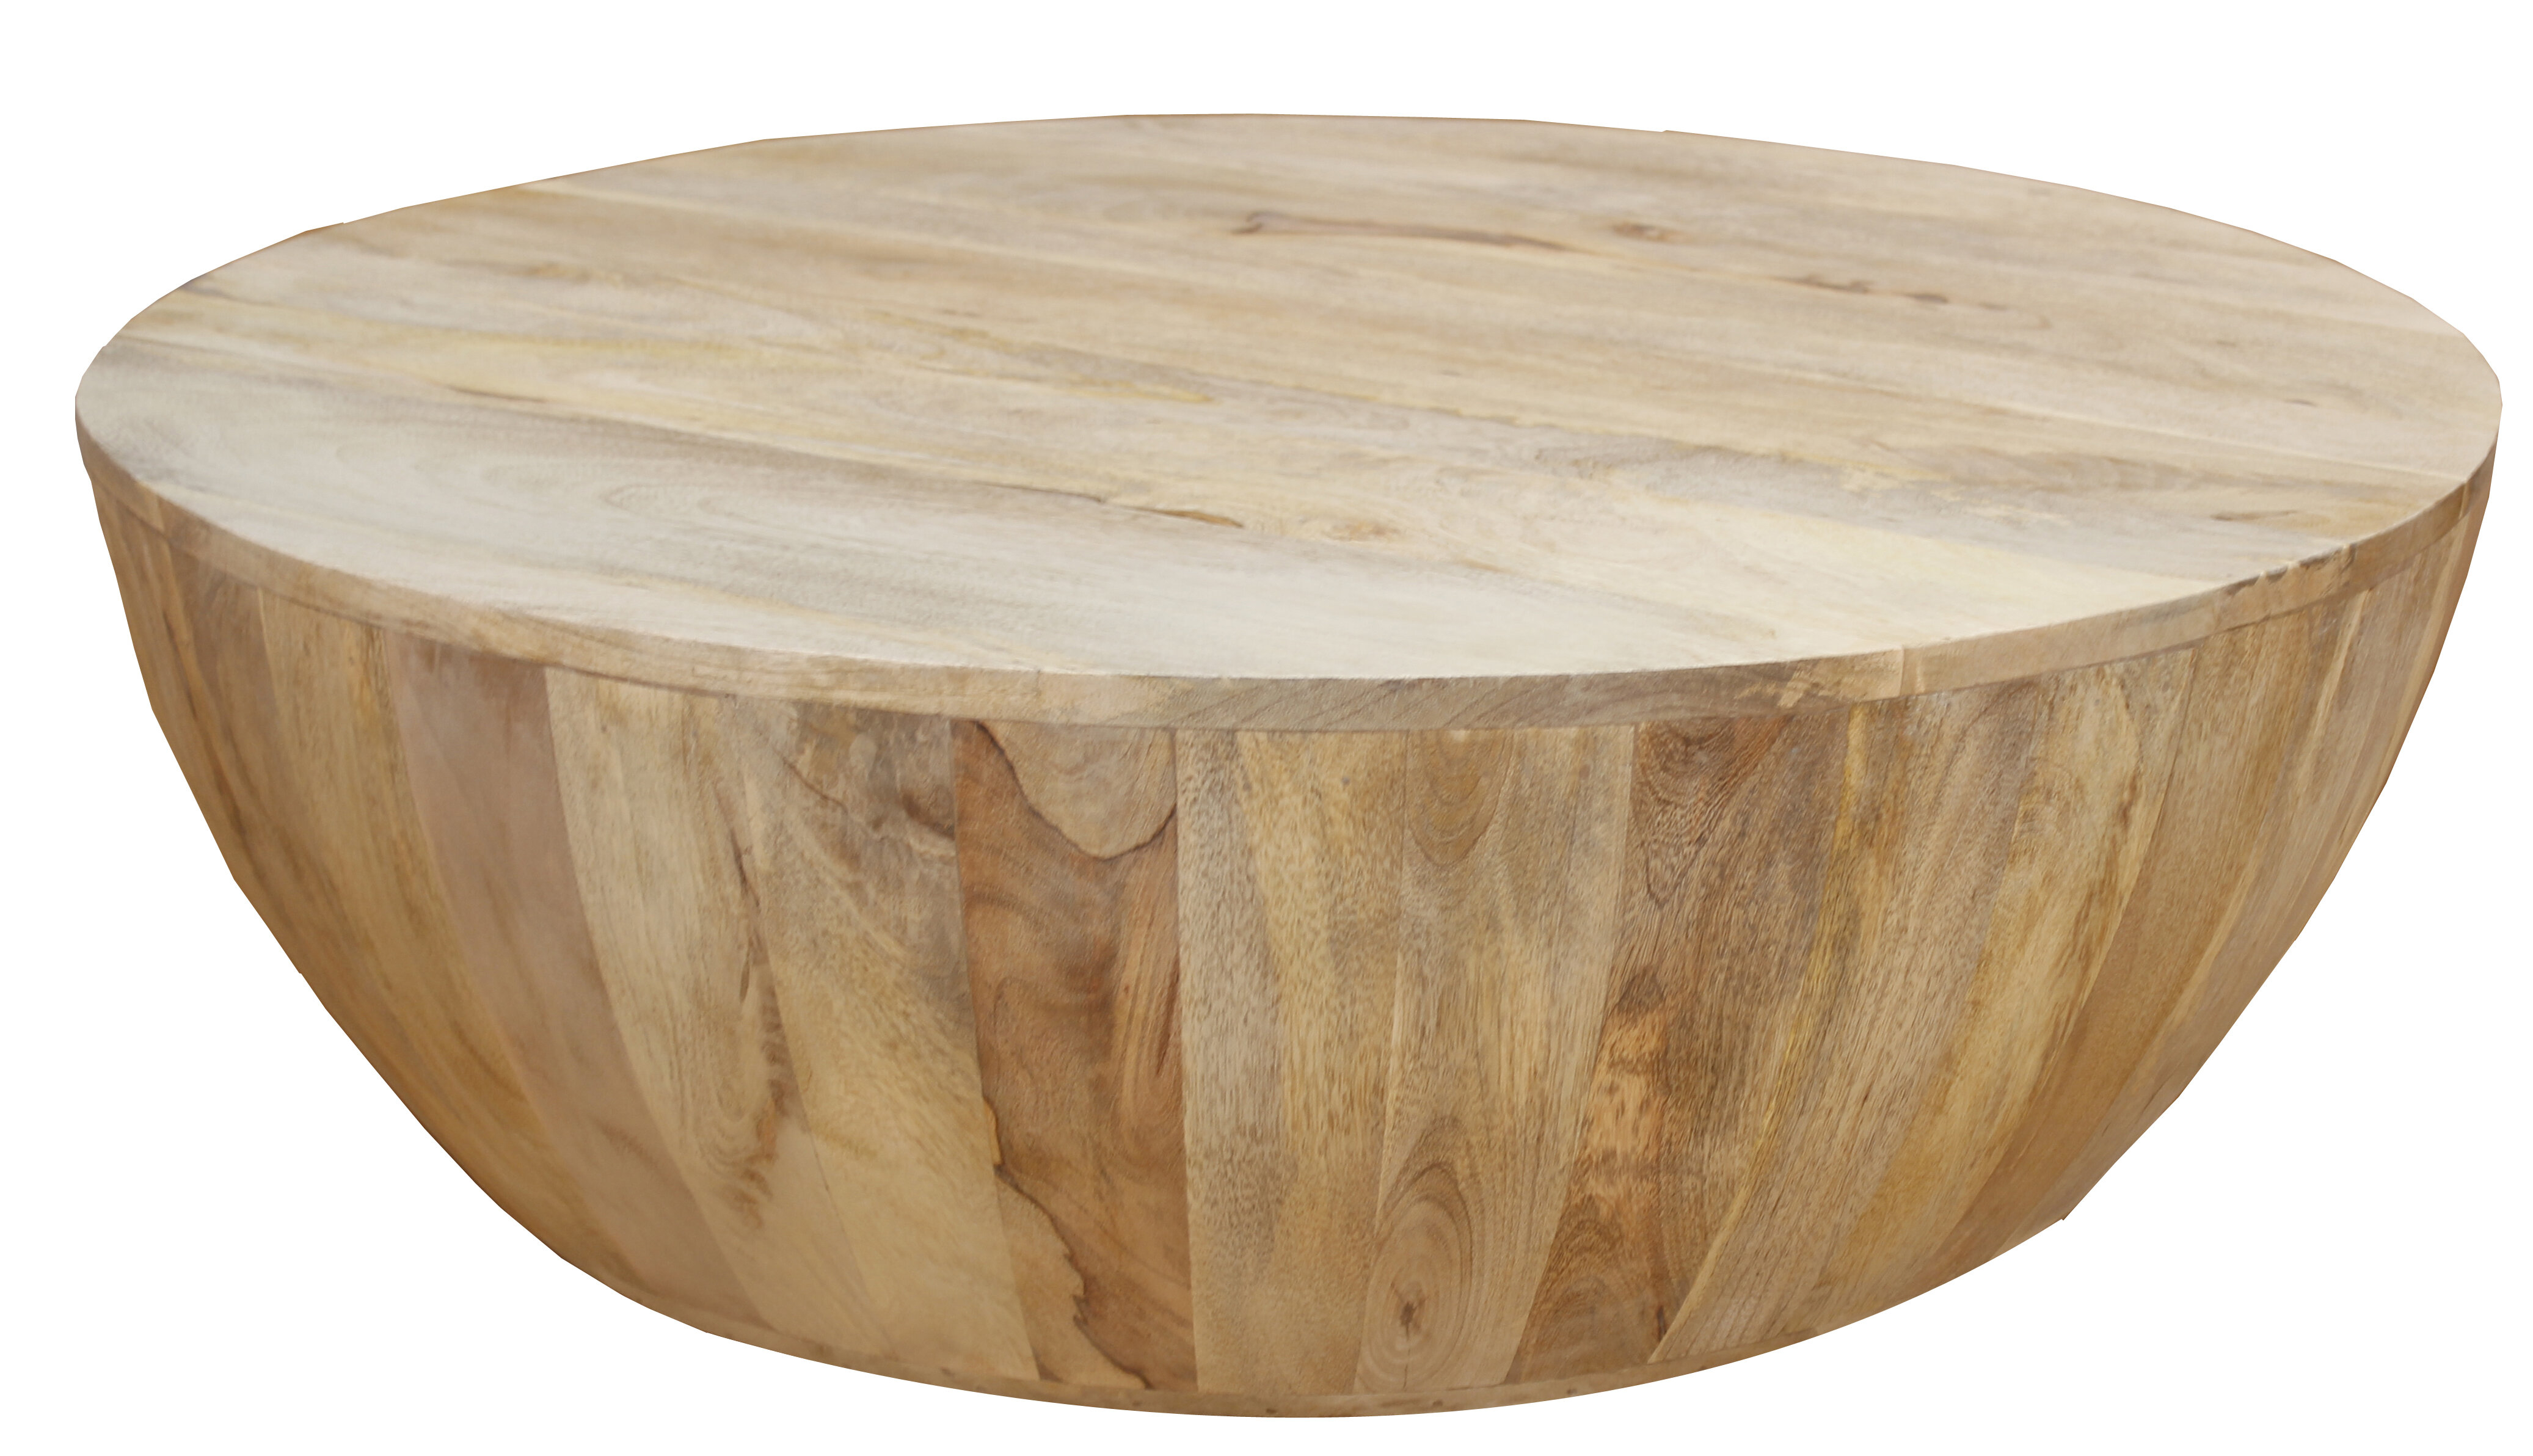 Rosecliff Heights Rodrigues Mango Wood Coffee Table Reviews Wayfair in measurements 4147 X 2384